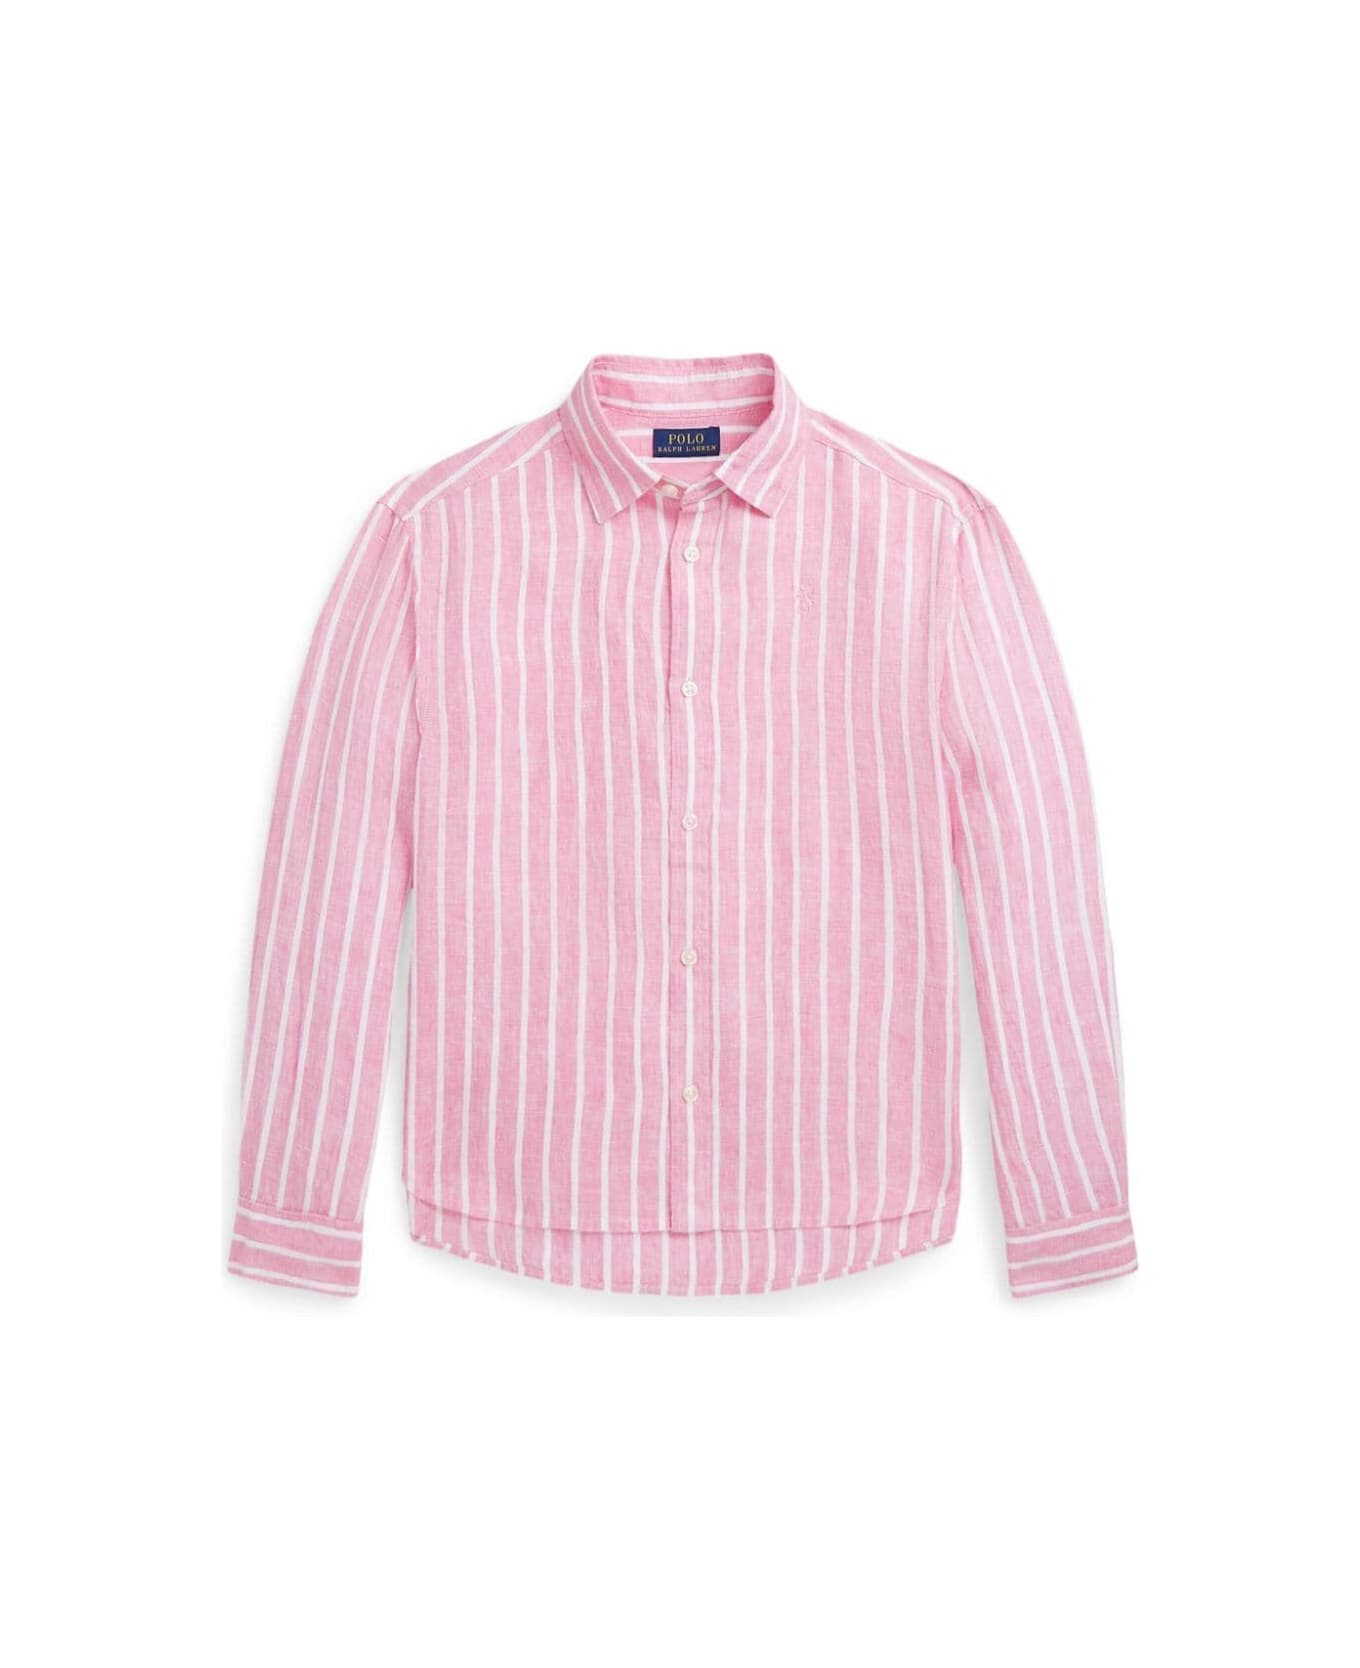 Polo Ralph Lauren Lismoreshirt Shirts Button Front Shirt - Pink White シャツ